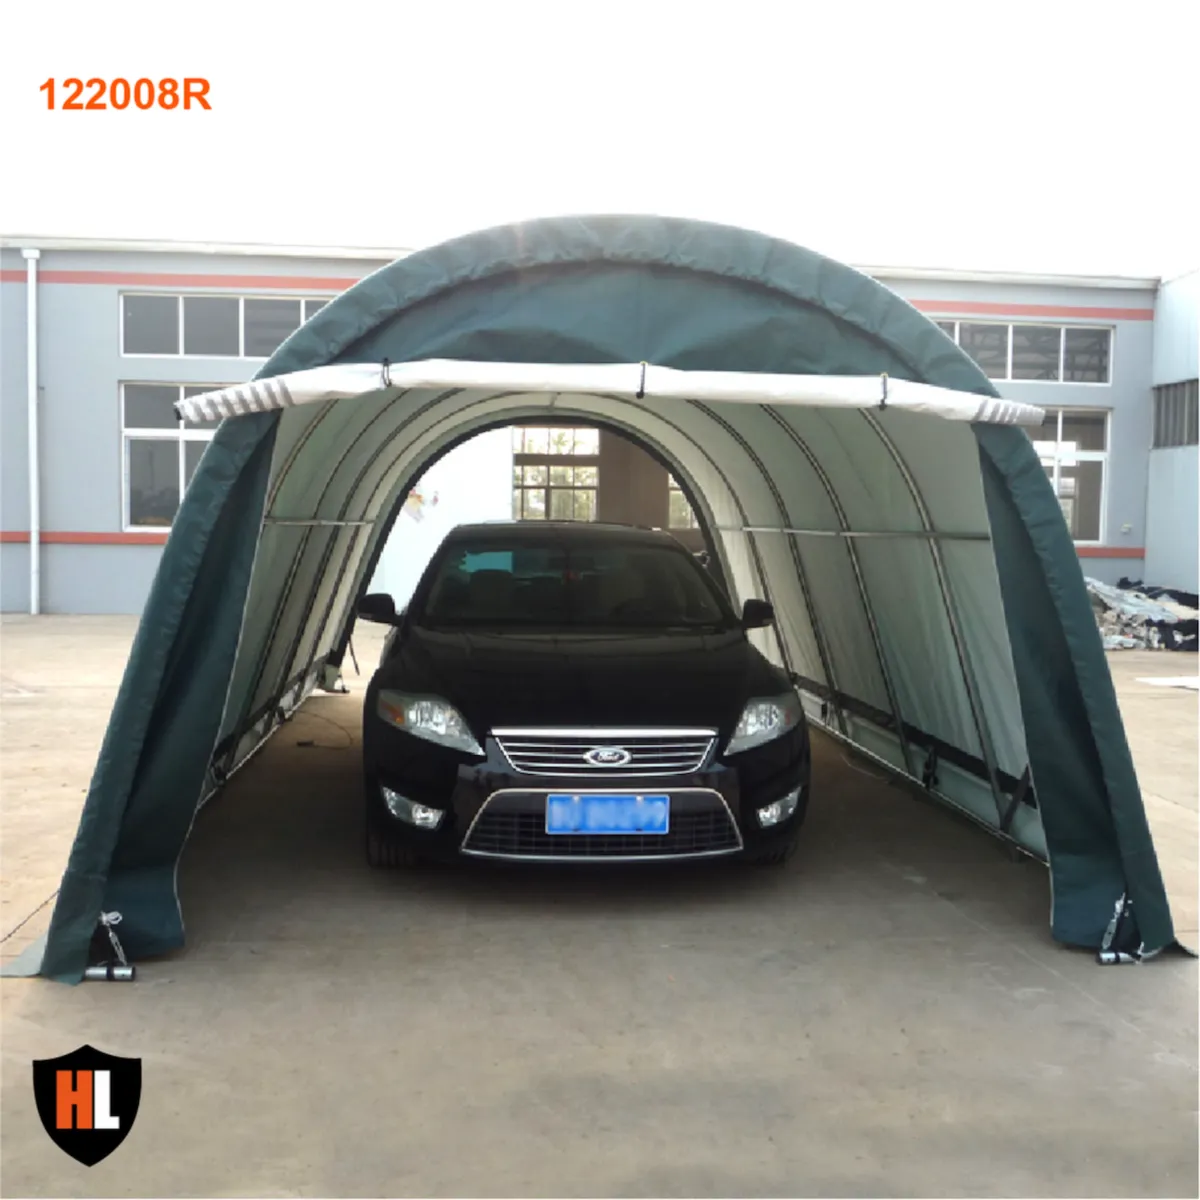 Carport Garage Tent (12x20x8) (Military Green)